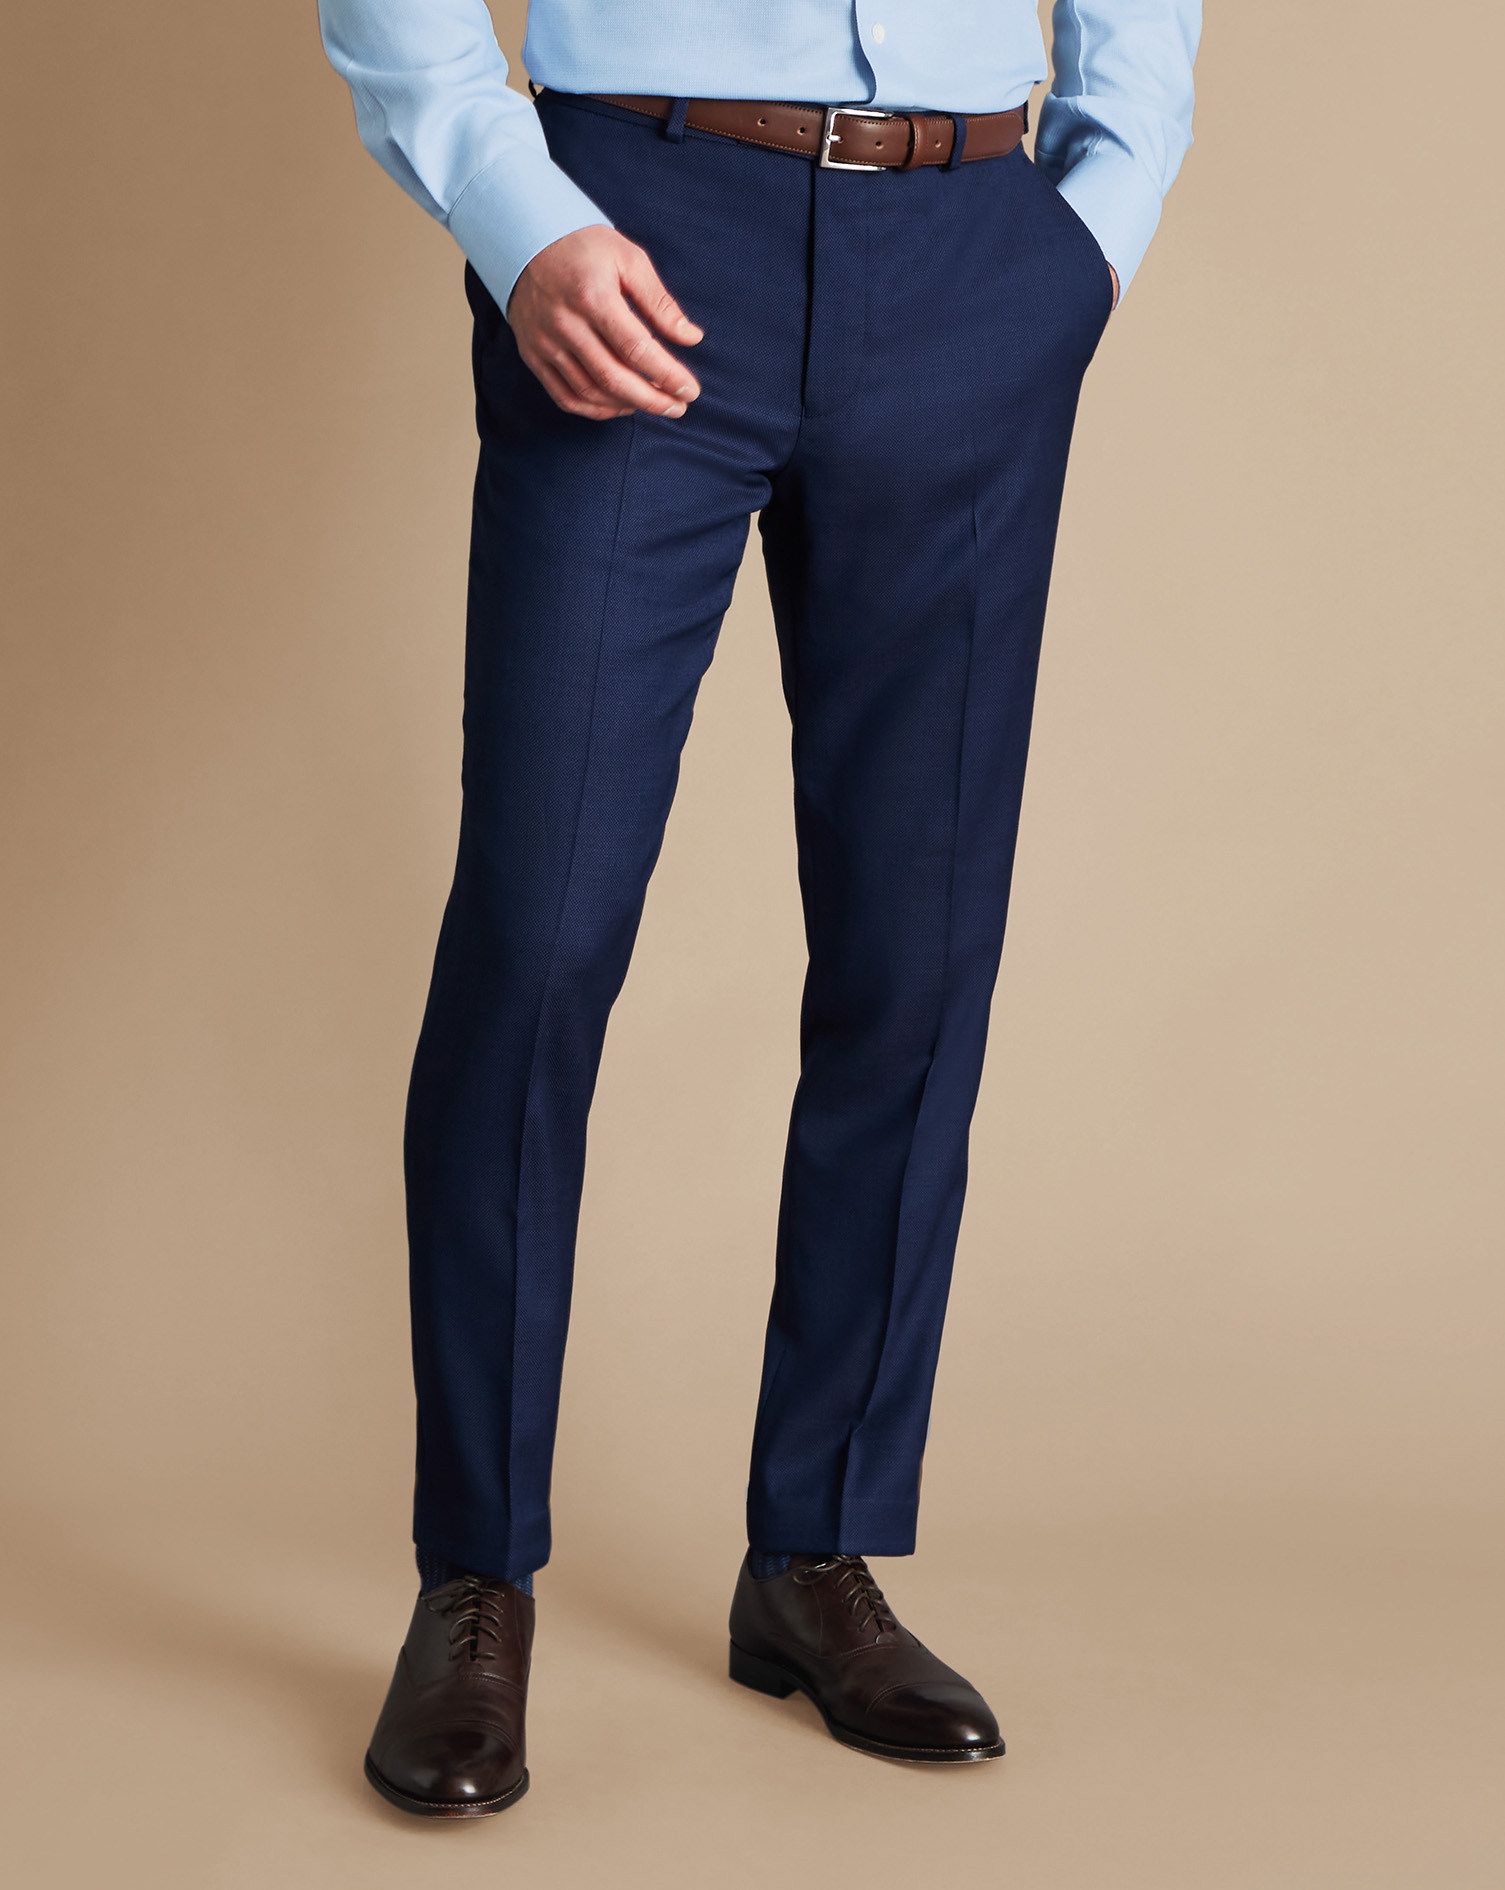 Men's Charles Tyrwhitt Ultimate Performance Birdseye Suit Trousers - Indigo Blue Size 30/32 Wool
